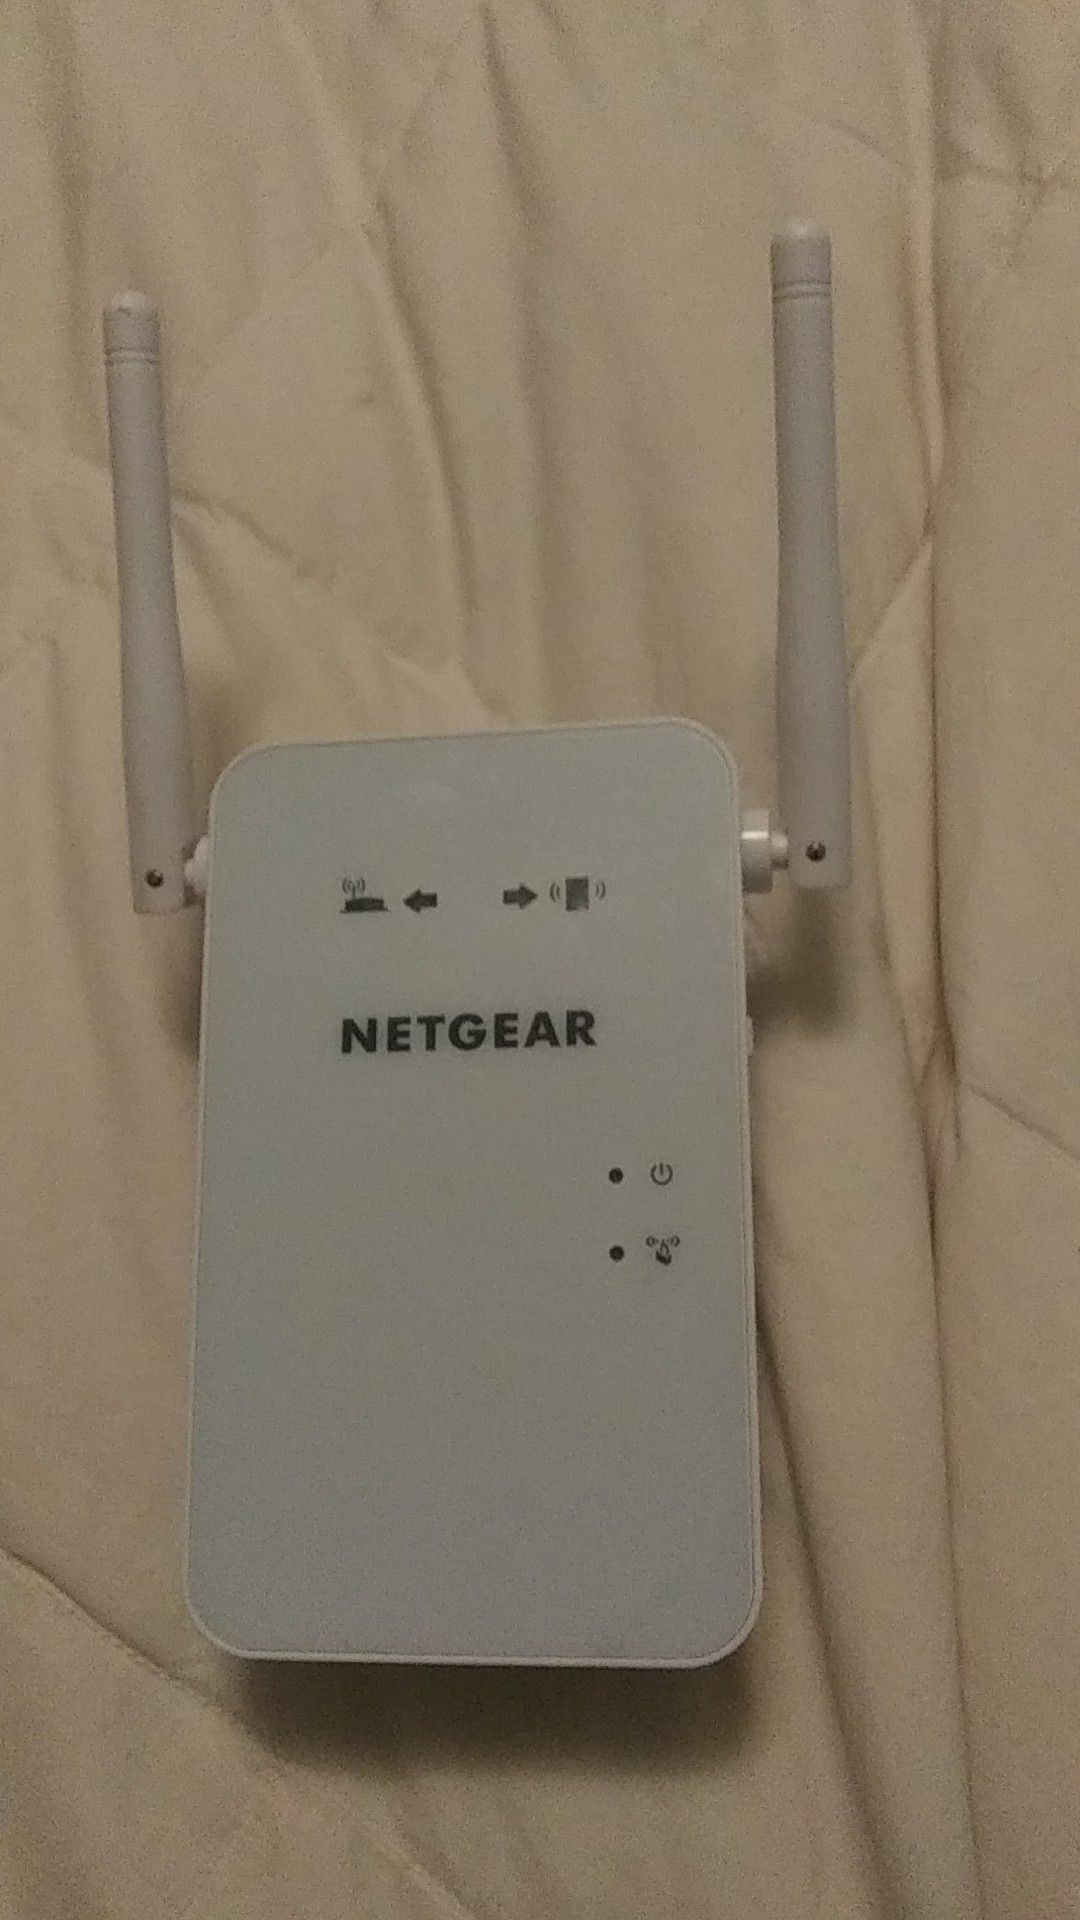 Netgear Wi-Fi range extender model ex6100